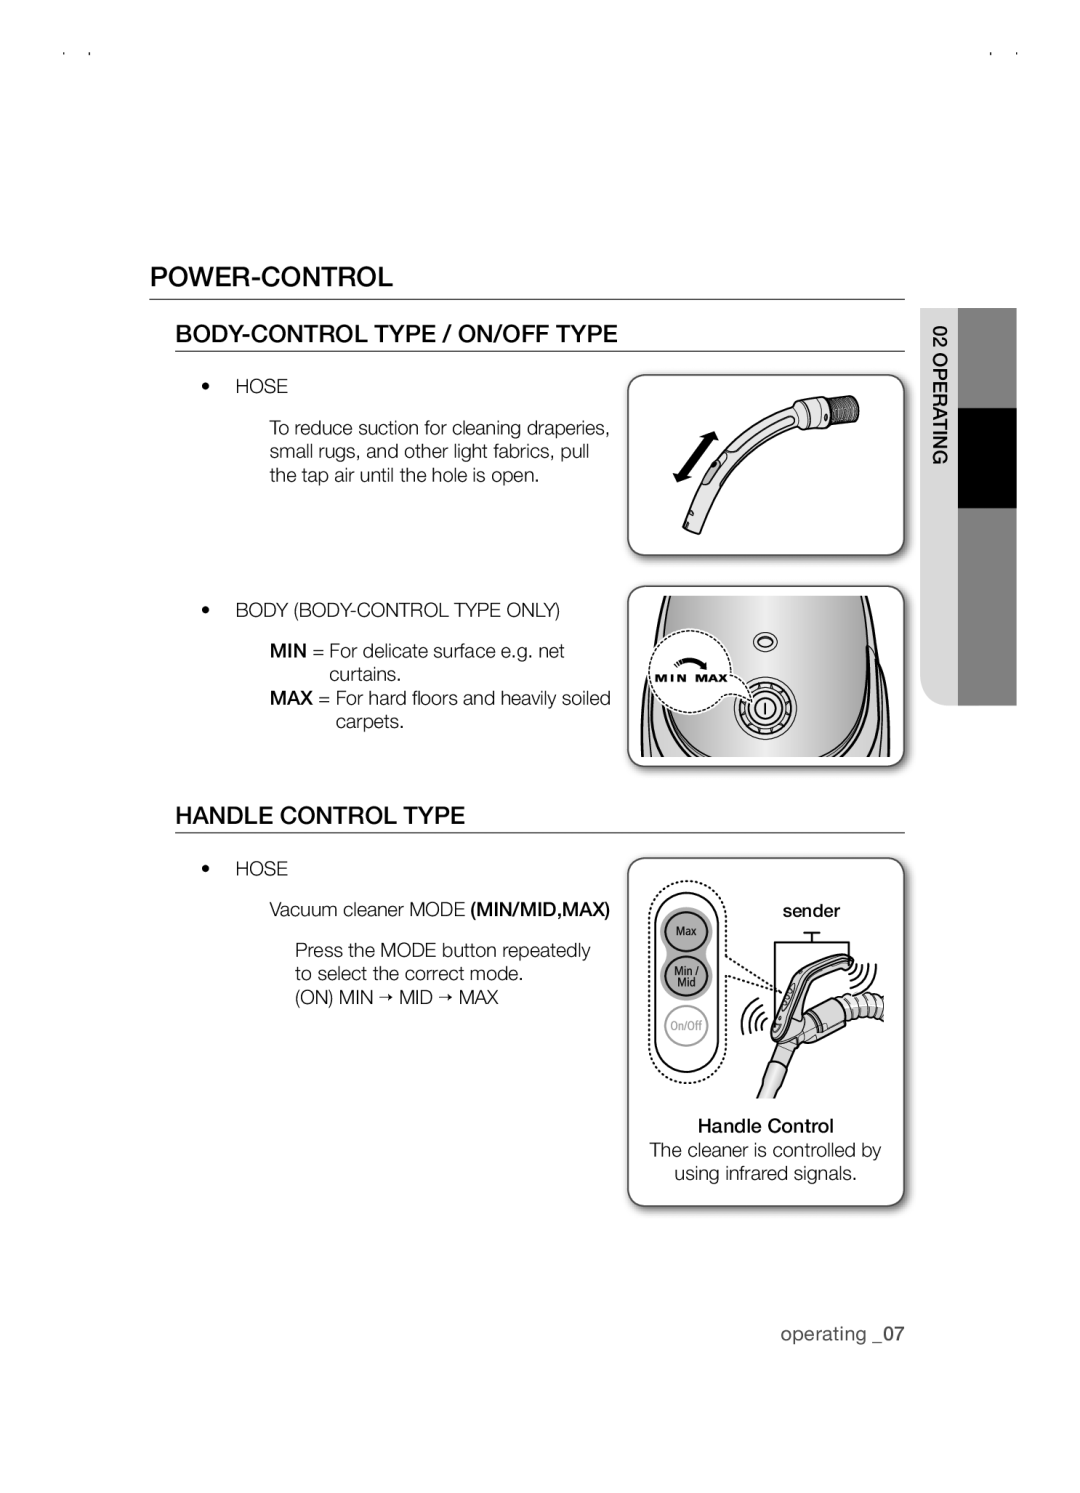 Samsung VCC5480V3B/XTR, VCC5480V3R/XTR manual Power-Control, Body-Control Type / On/Off Type, Handle Control Type, operating 